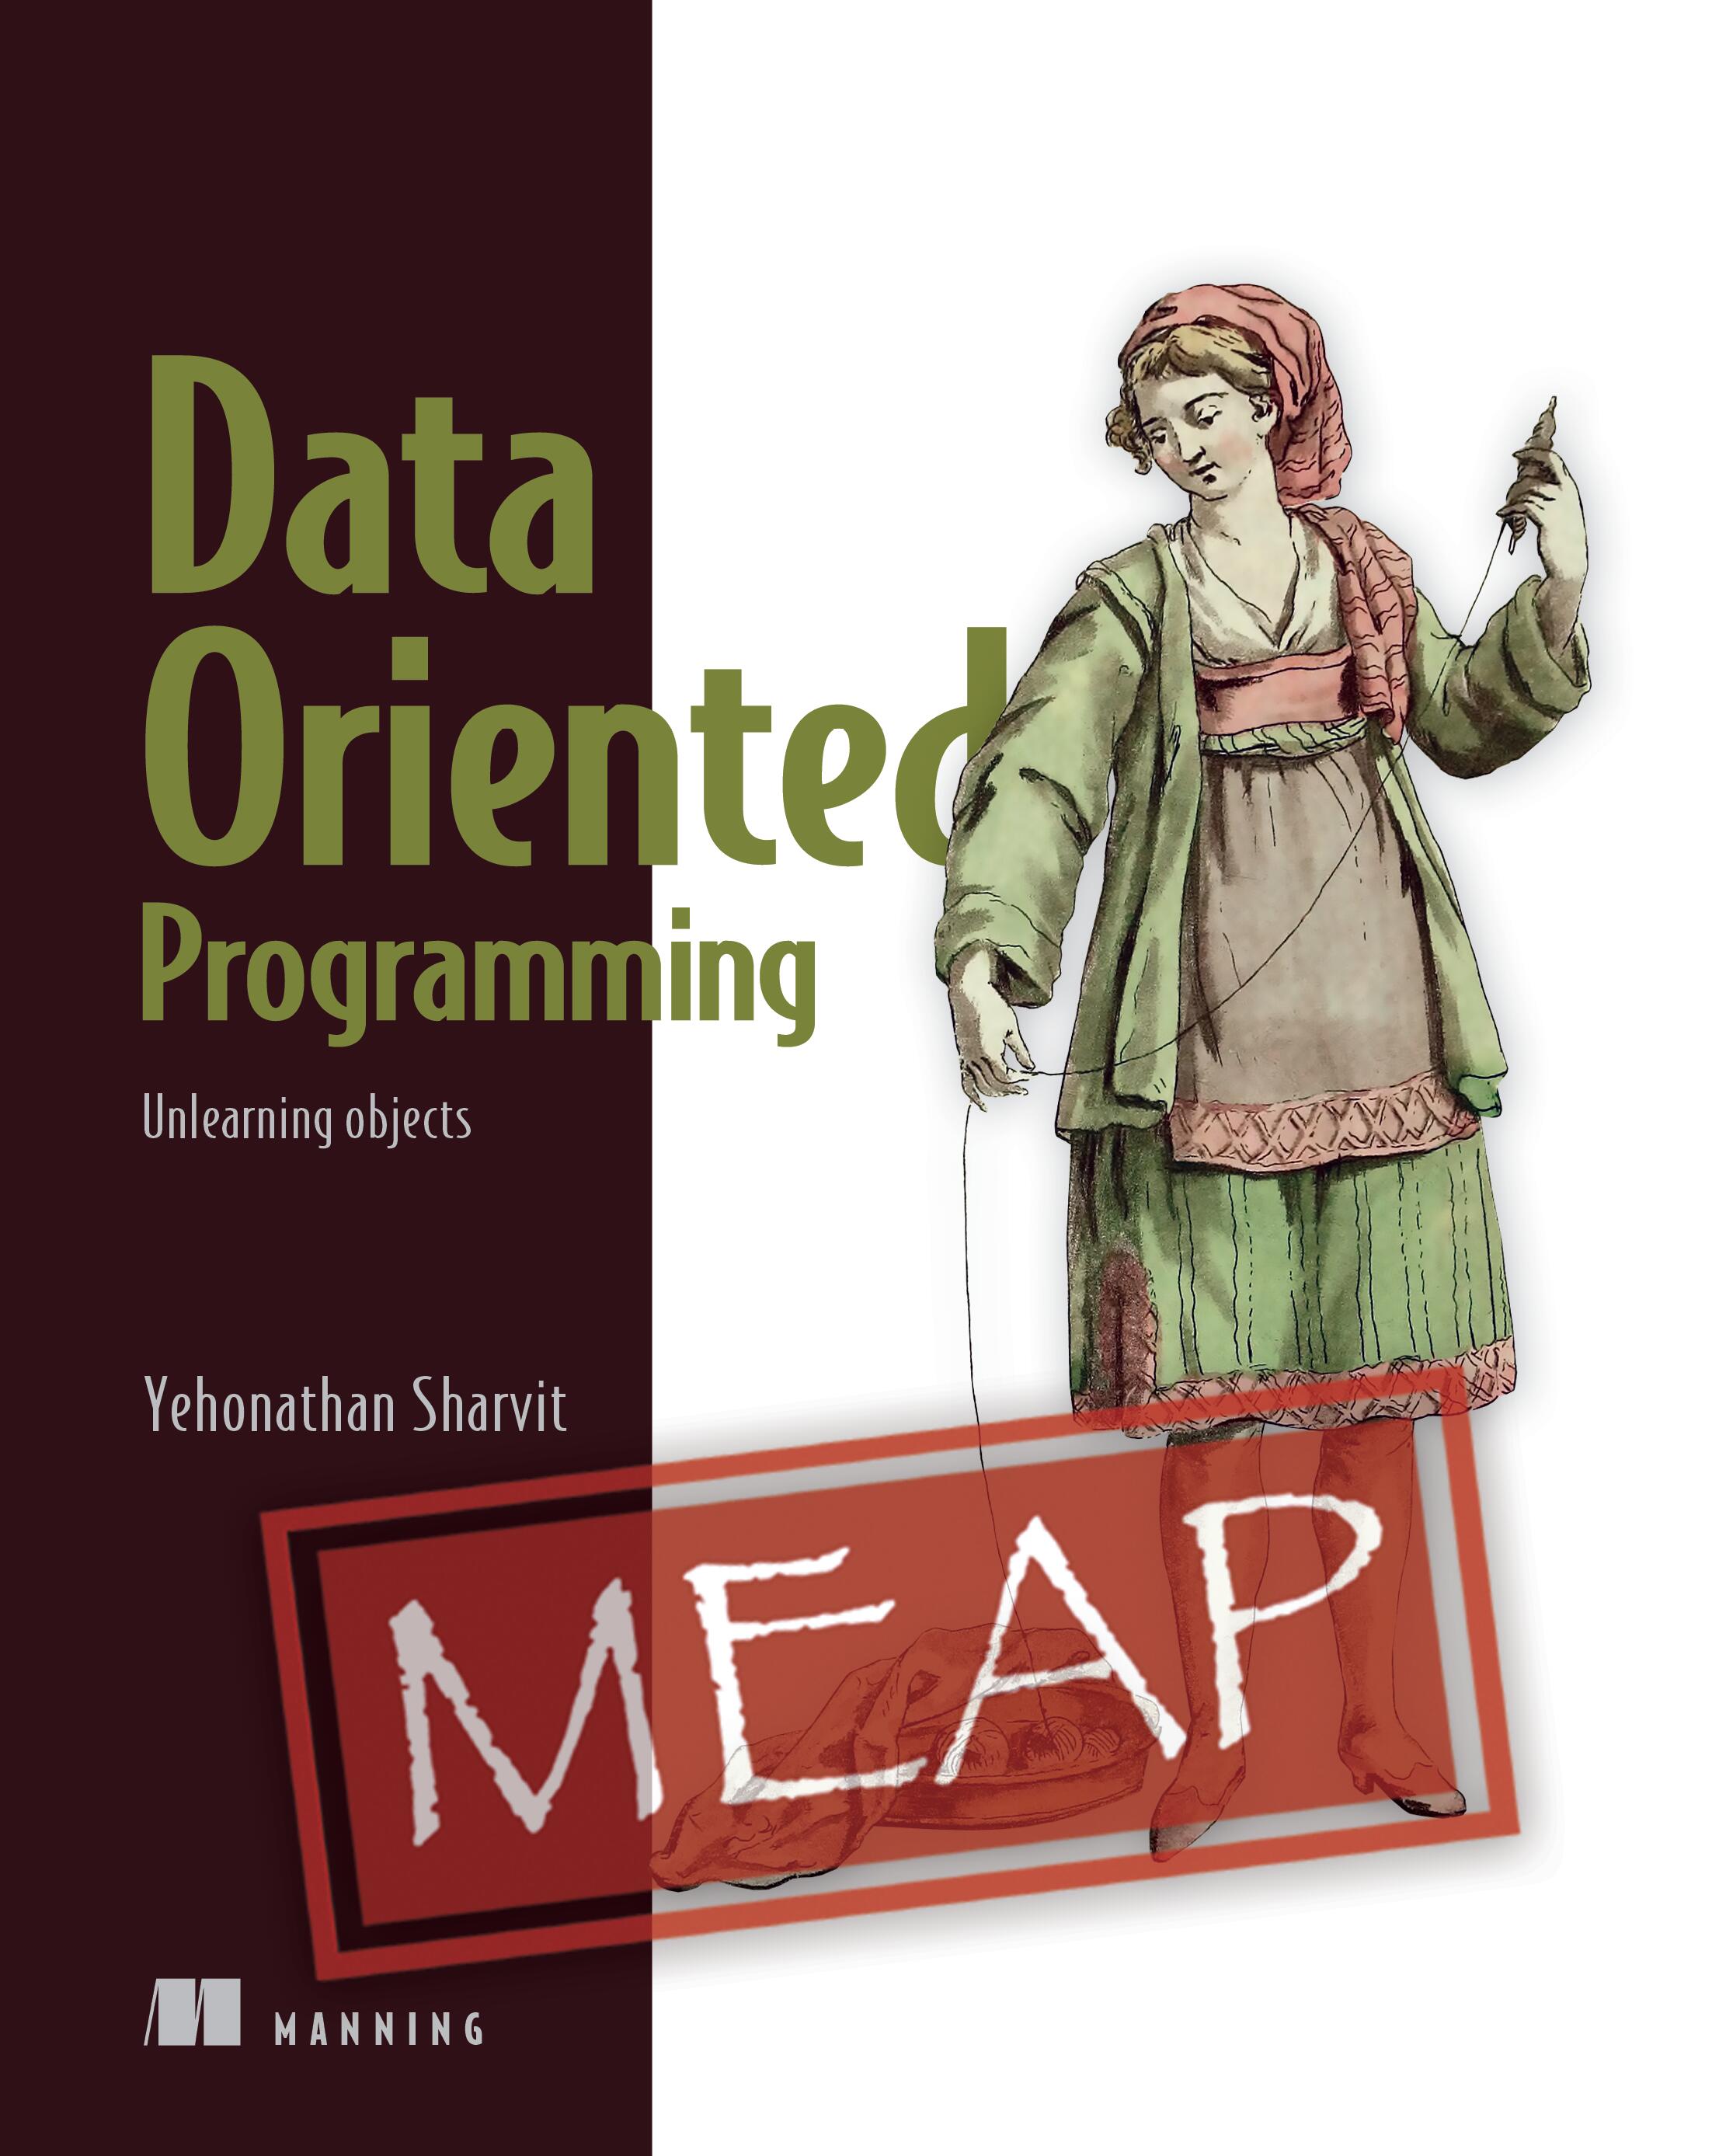 Data-Oriented Programming (Manning)